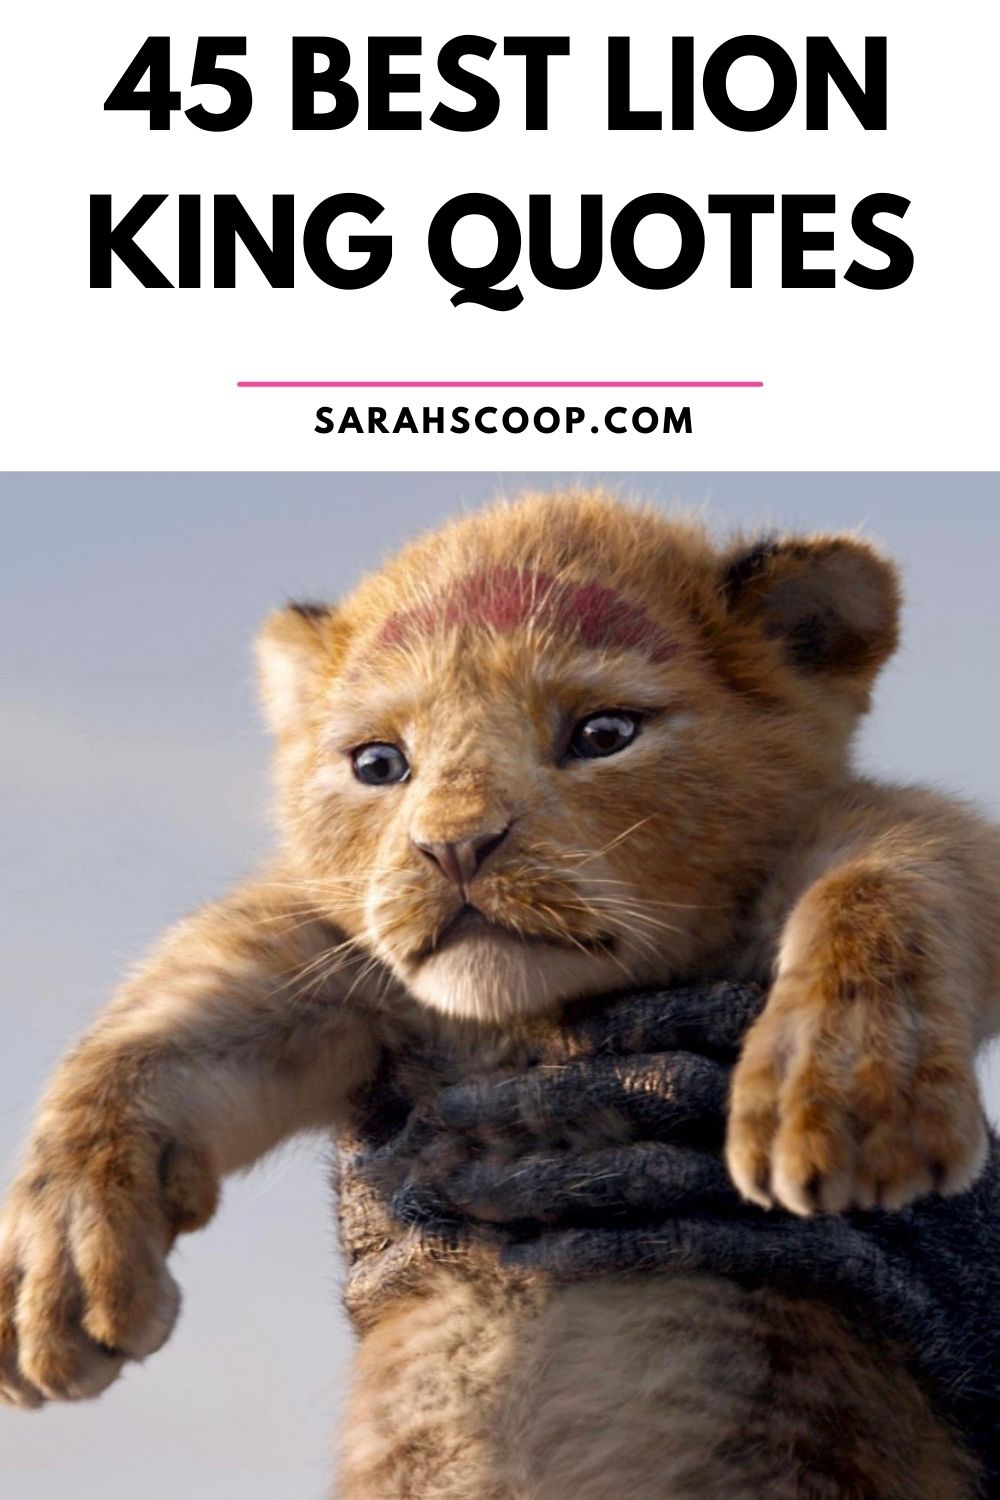 45 Best Lion King Quotes - Sarah Scoop